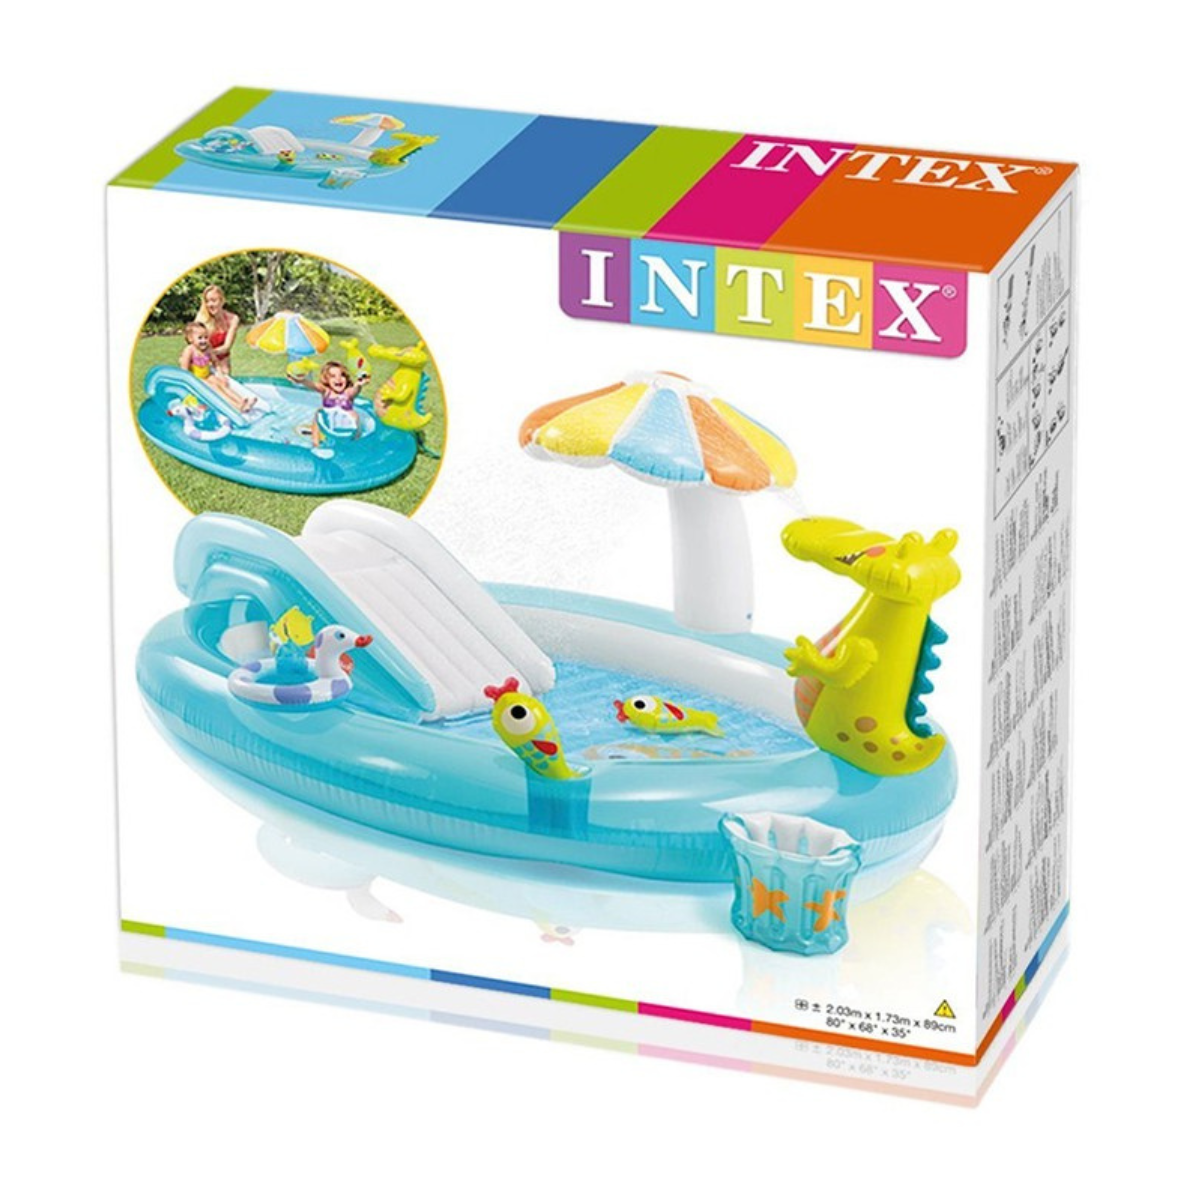 Intex Gator Play Center